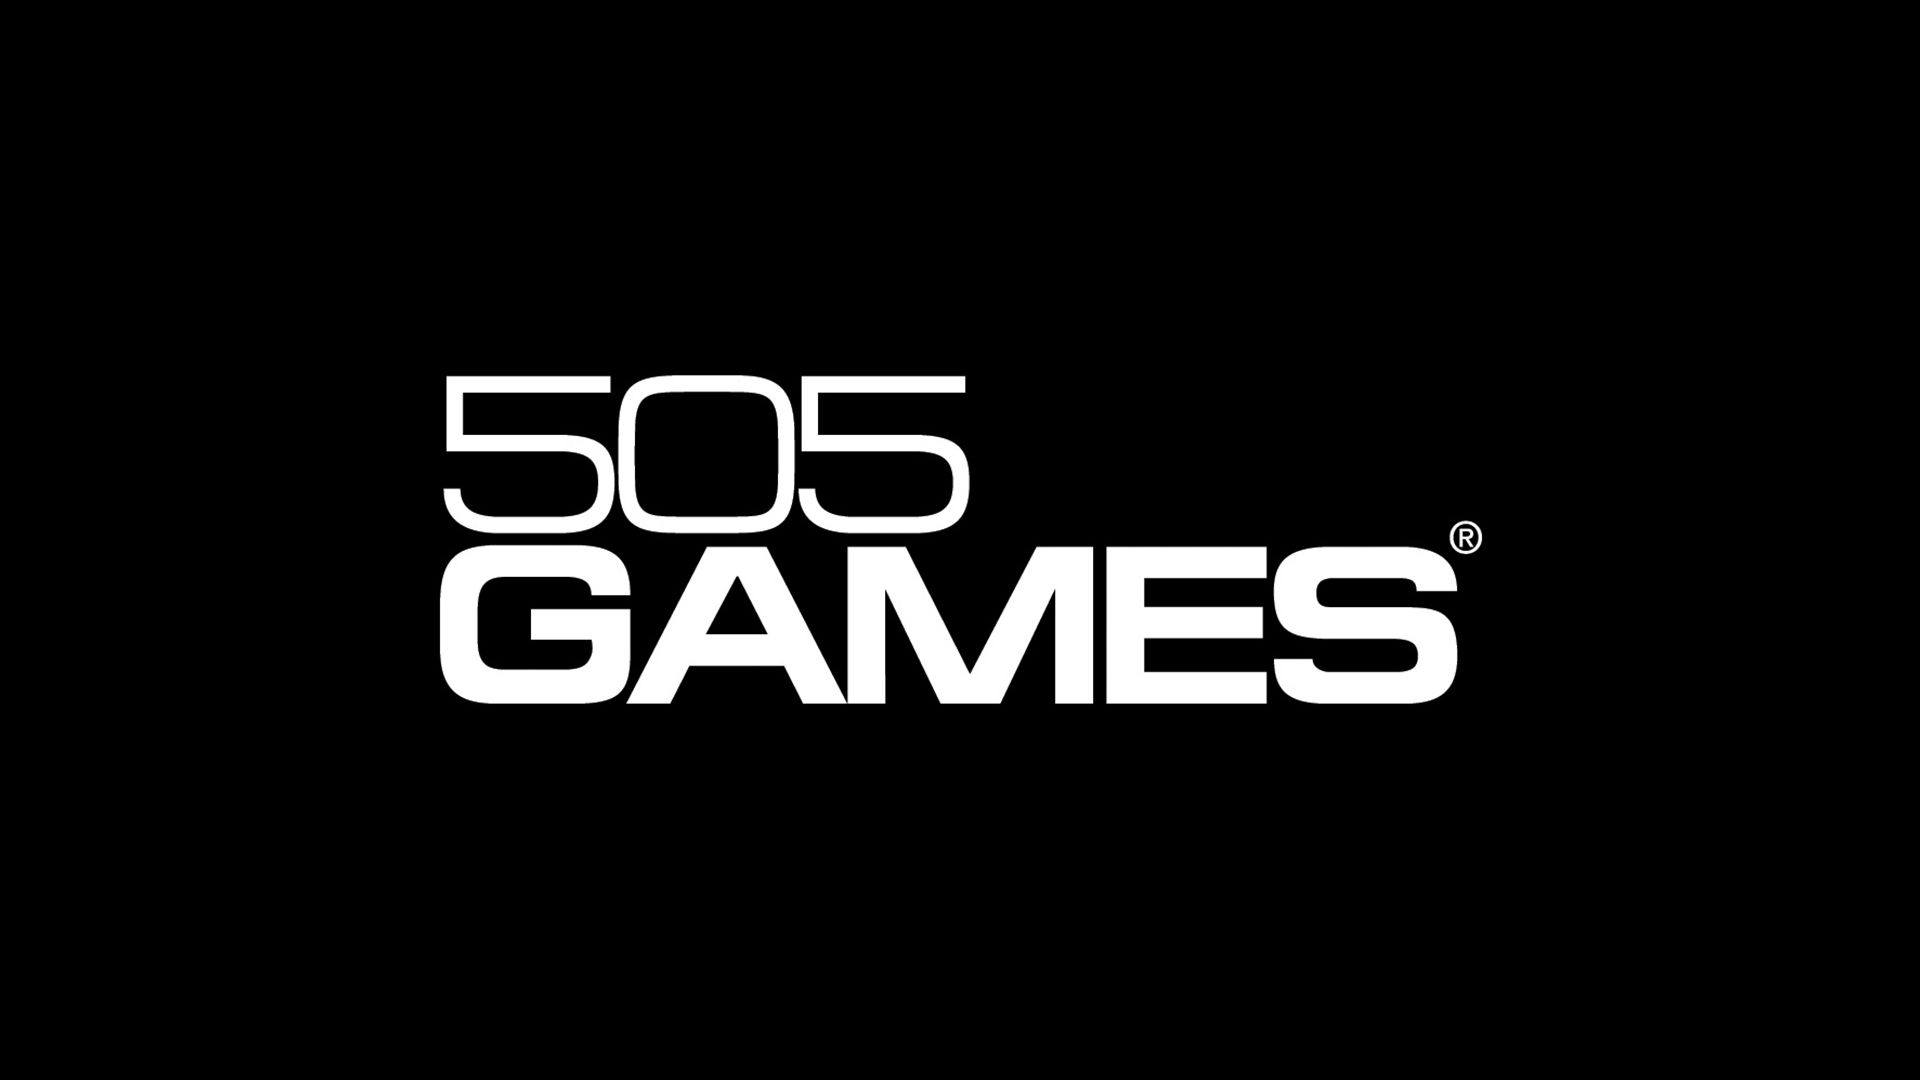 505 Games. 505 Games logo. 505 Games social campaign. 505 games игры